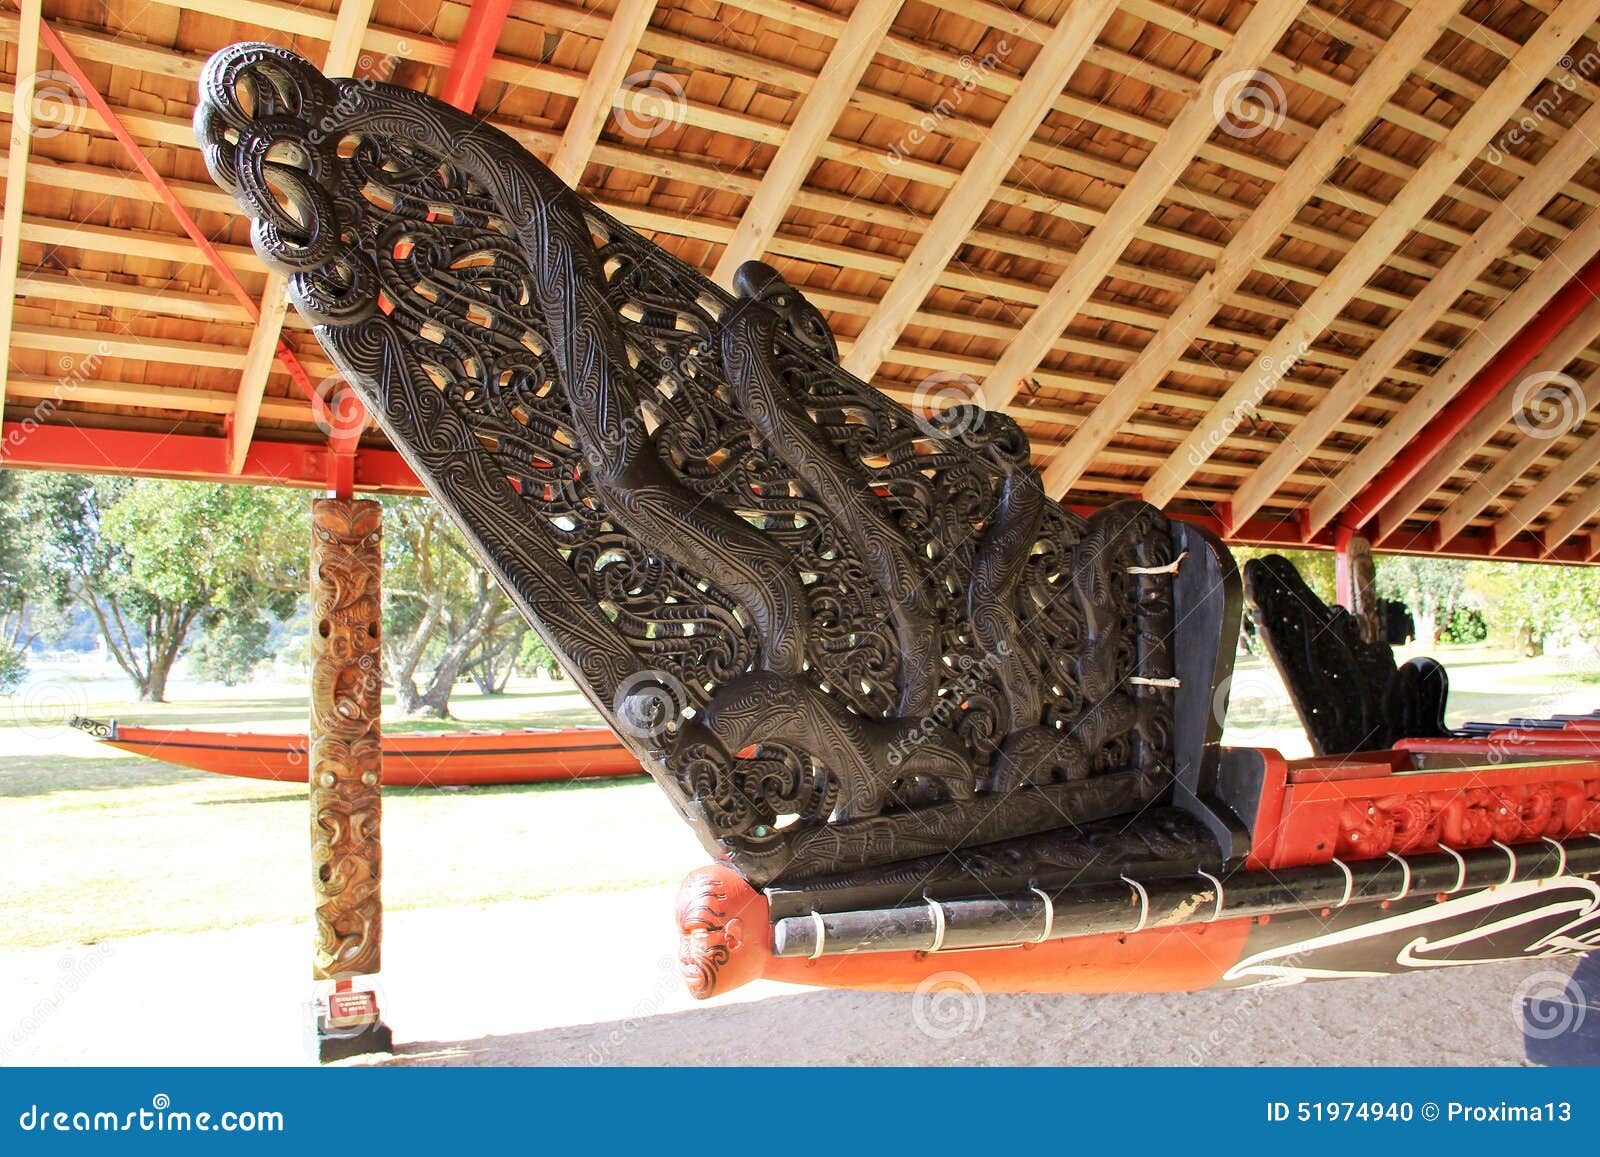 Maori War Canoe Made Of Kauri Wood Editorial Image - Image: 51974940